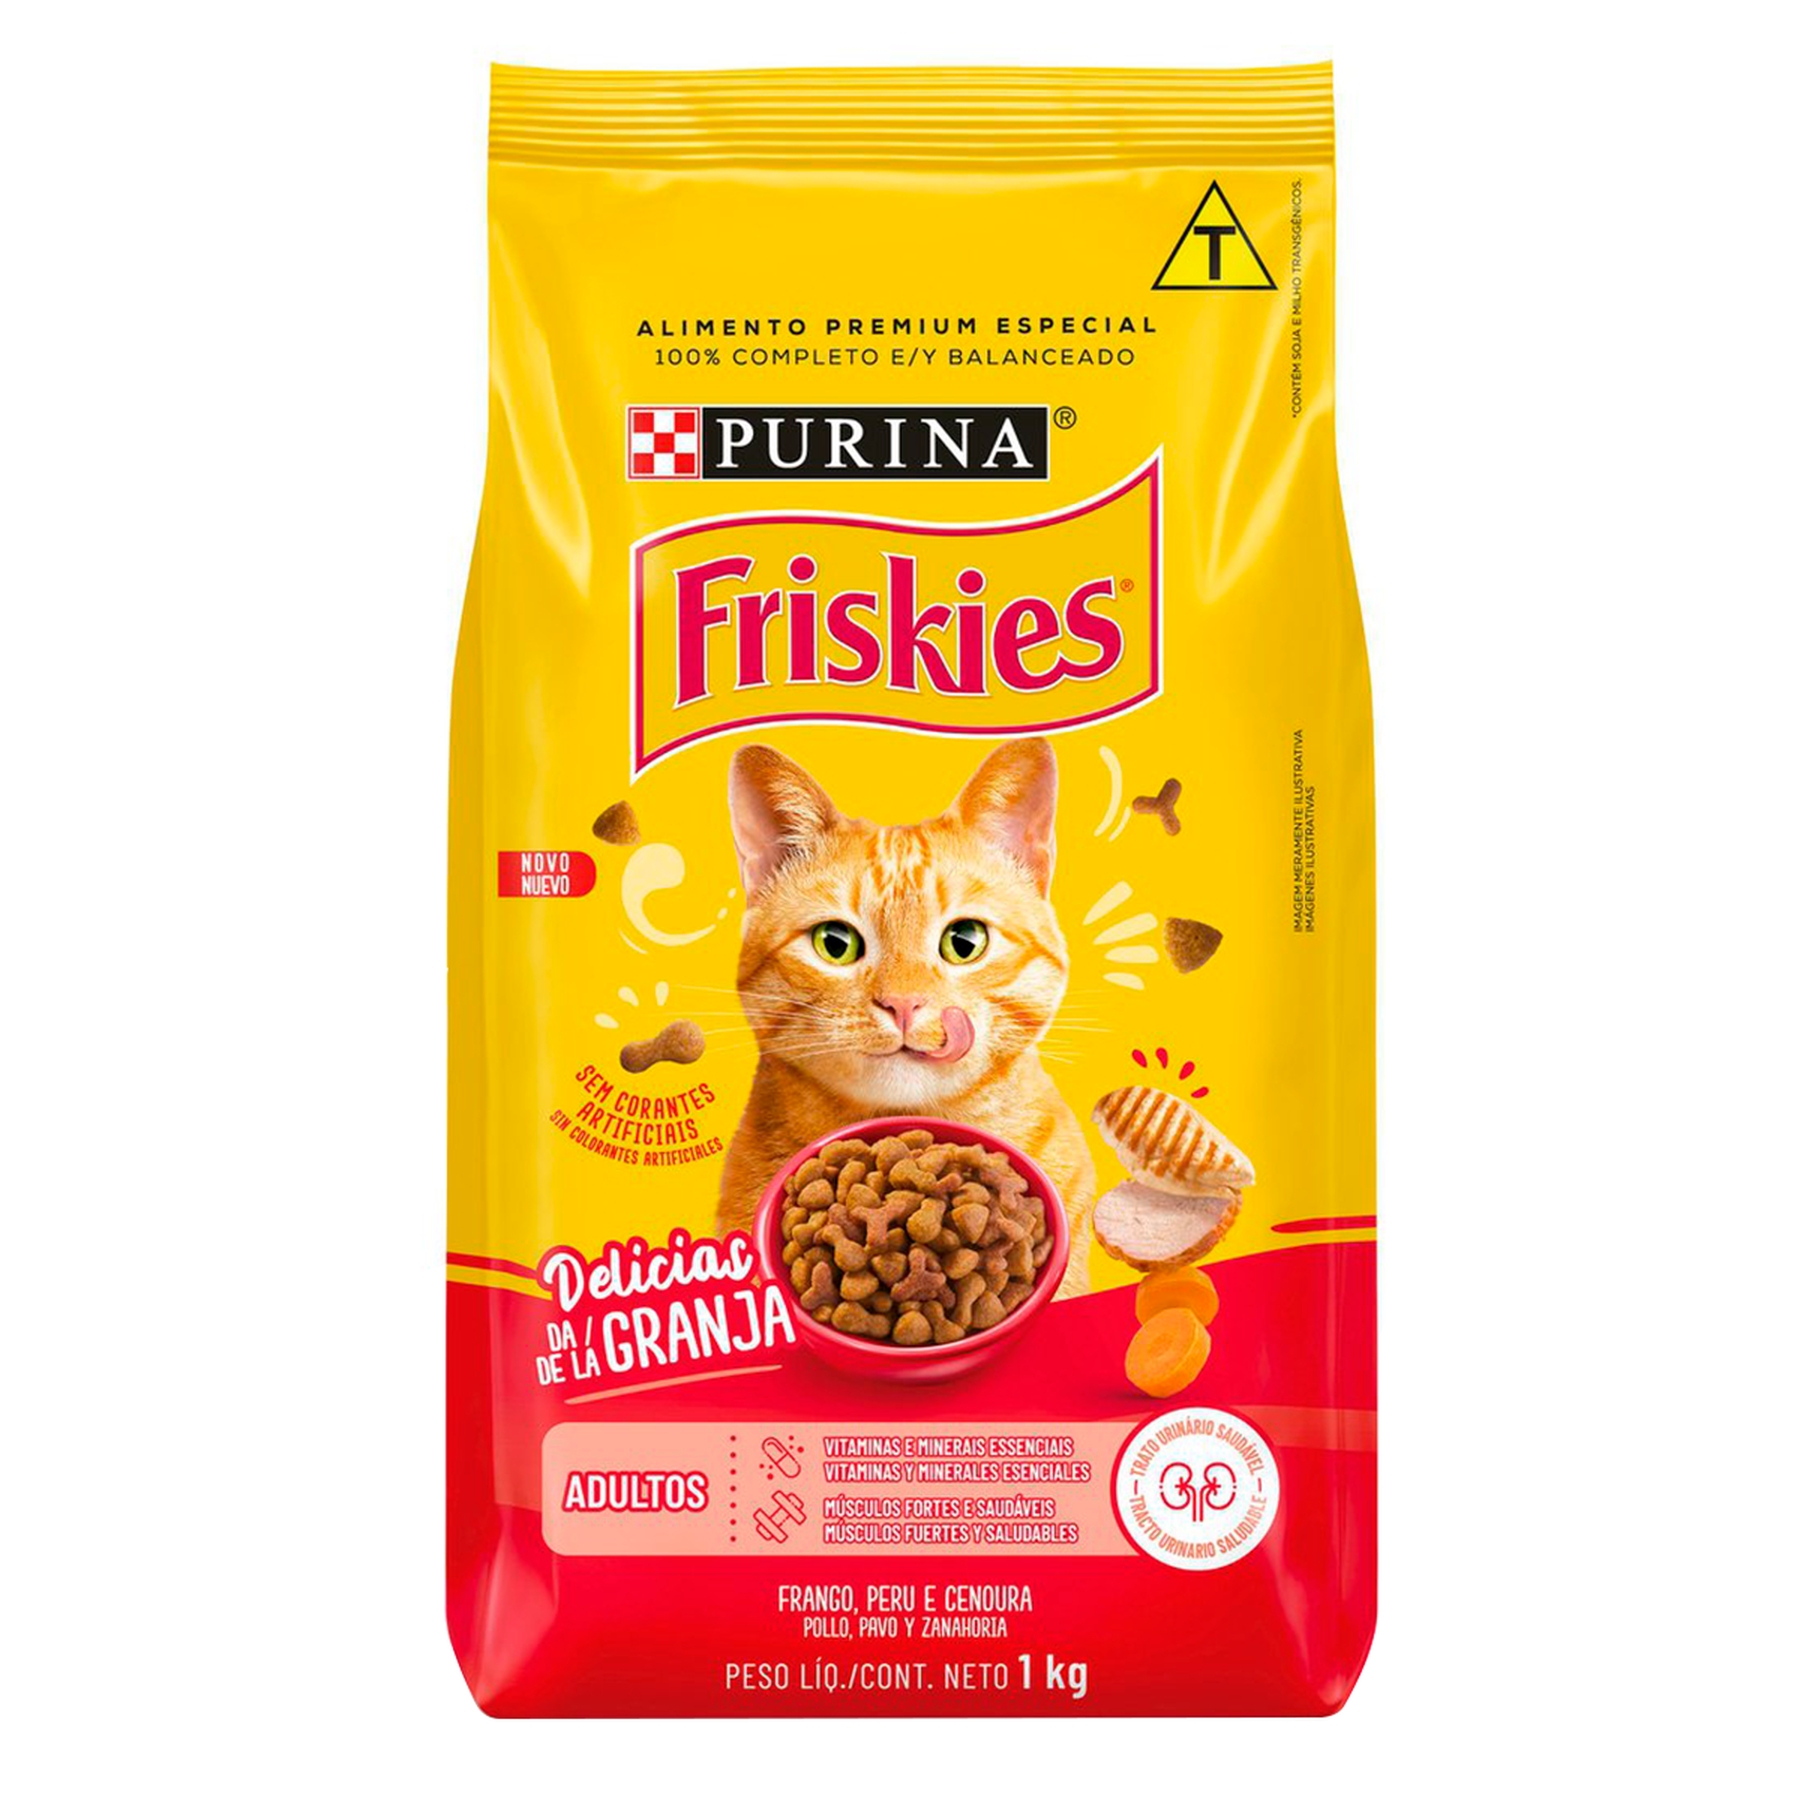 Alimento para Gatos Adultos Frango Purina Friskies Pacote 1kg